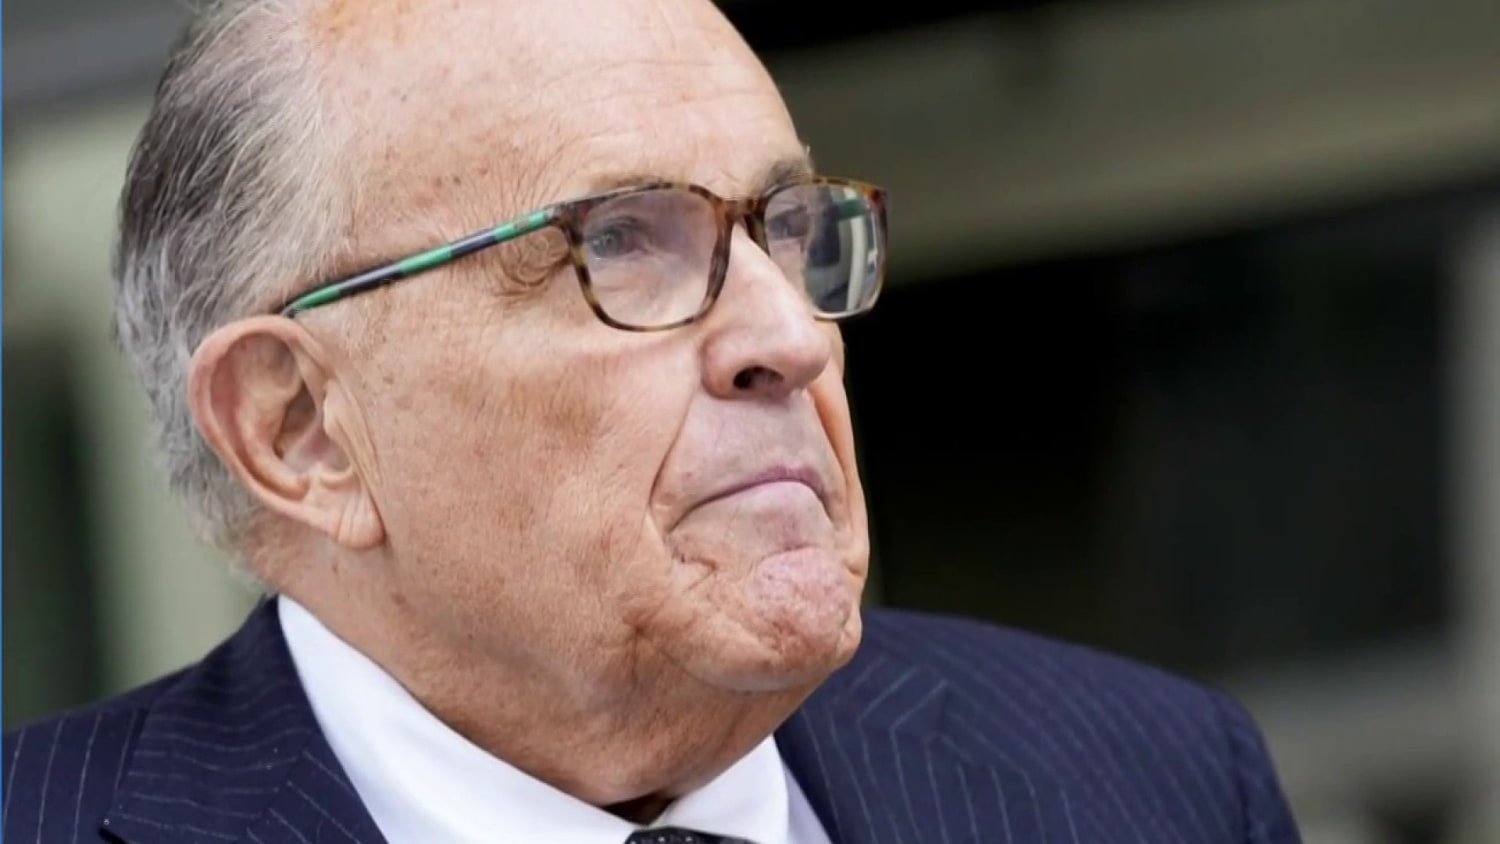 Rudy Giuliani and 10 other Trump allies arraigned in Arizona fake electors case